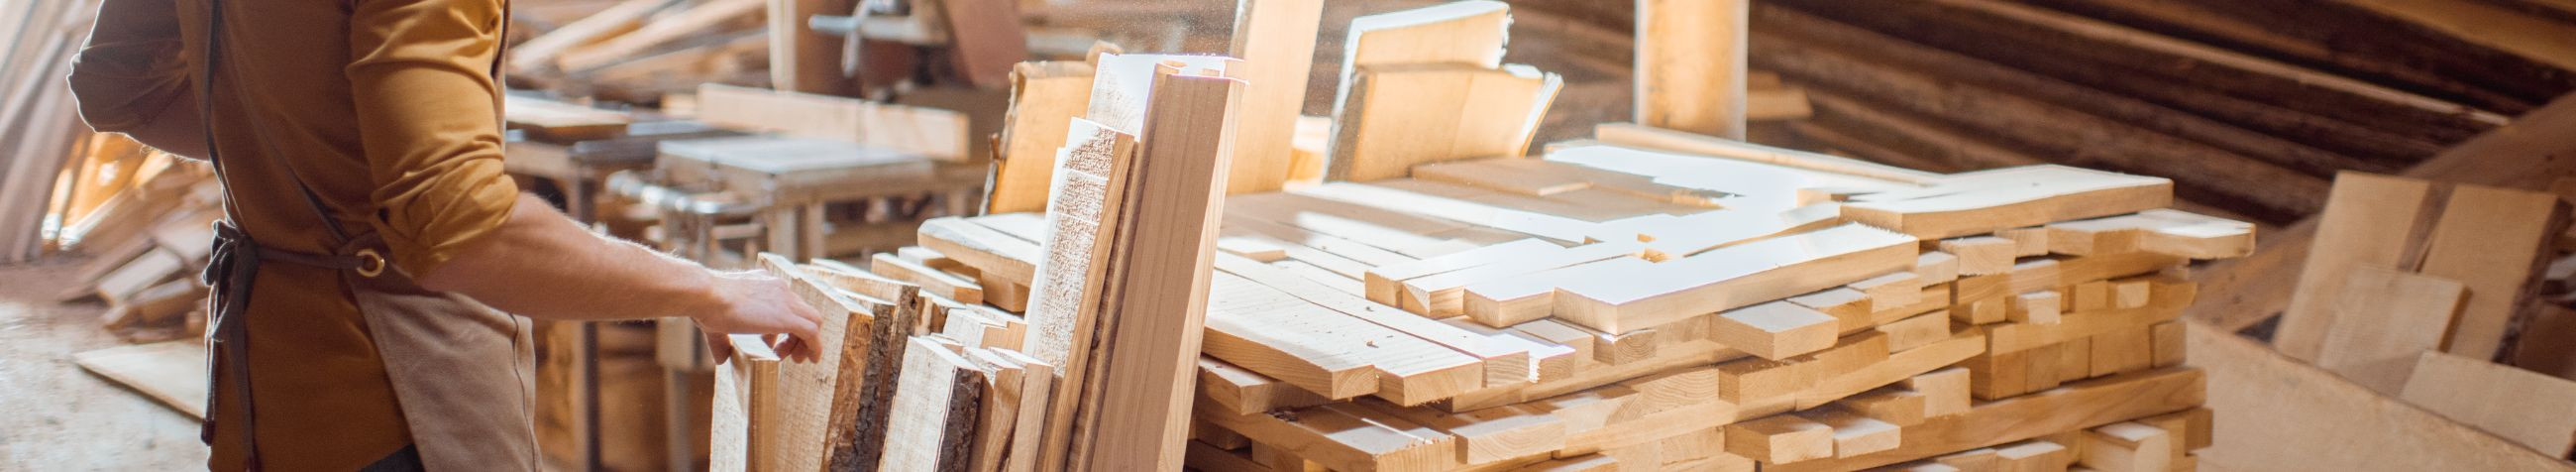 Wood Detail, manufacture of wood parts, manufacture of wooden parts, wood furniture, material, Wood, Furniture, furniture restoration, reconstruction of parts, furniture maintenance